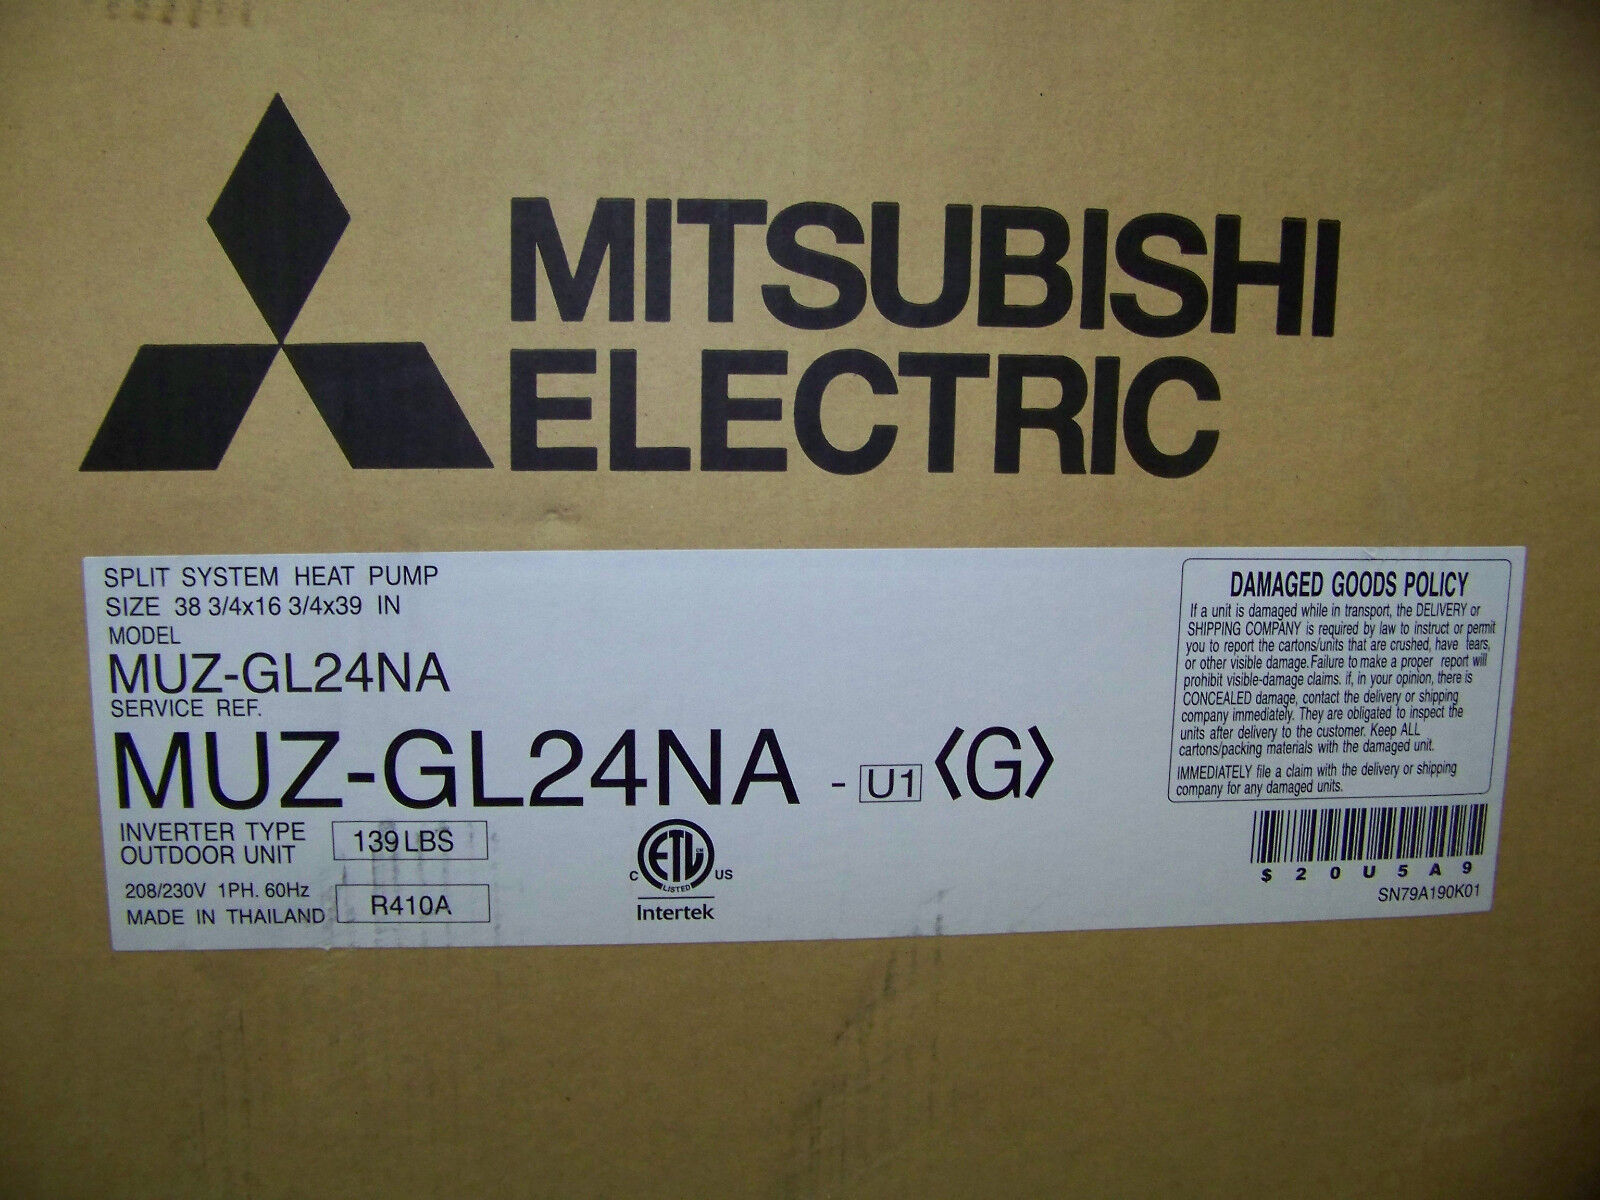 Mitsubishi Electric Split-System Heat Pump 208/230V 60Hz R410A 24kBTU MUZ-GL24NA